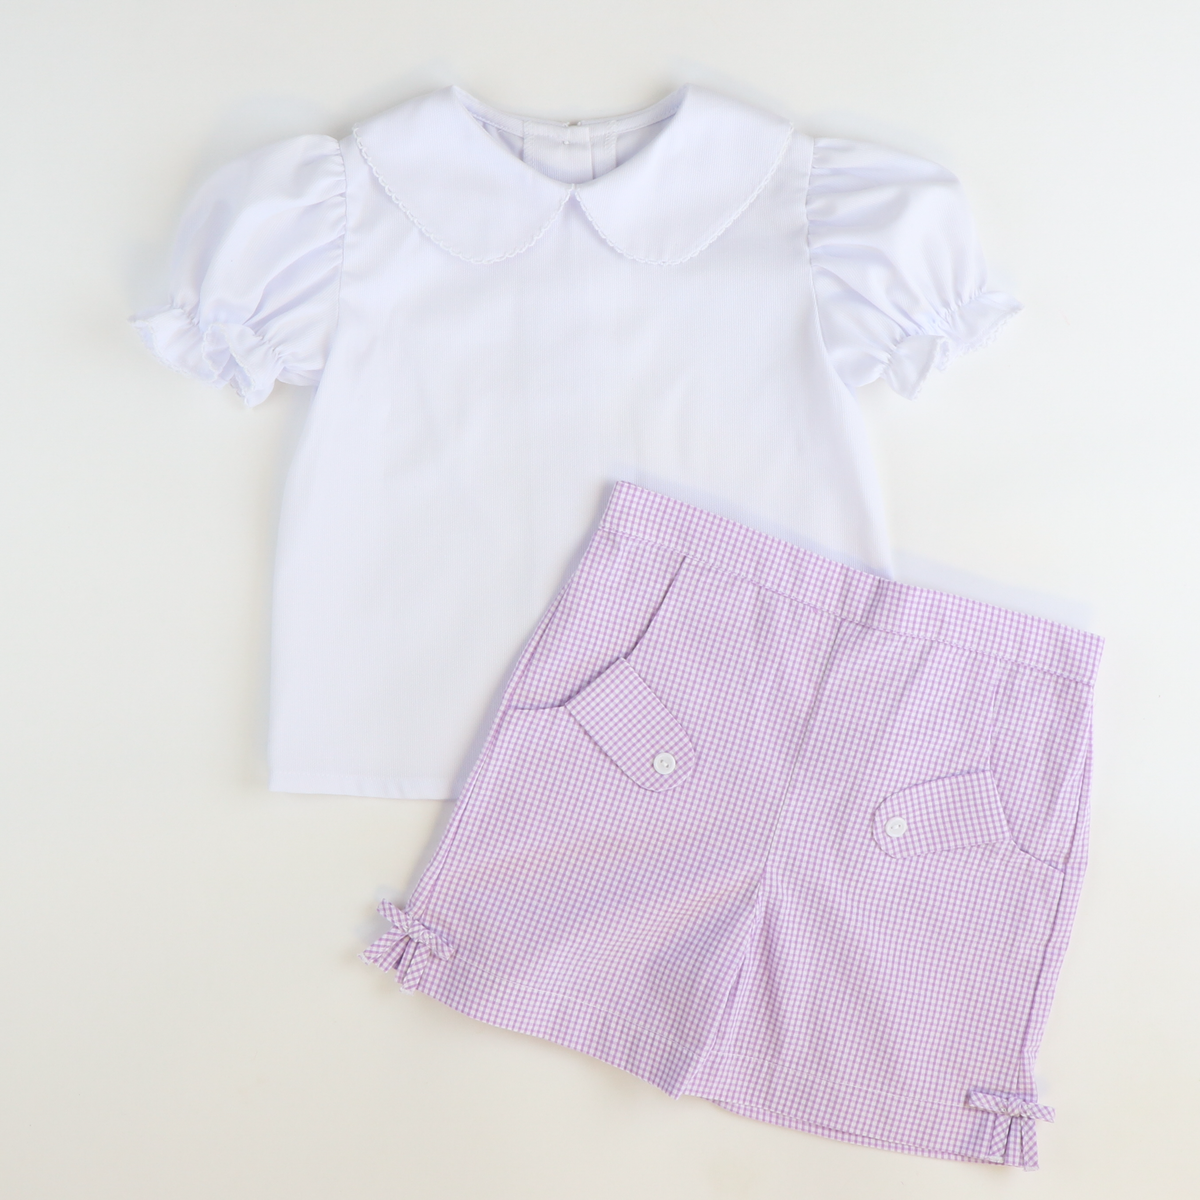 Bow Shorts - Lavender Mini Check Seersucker